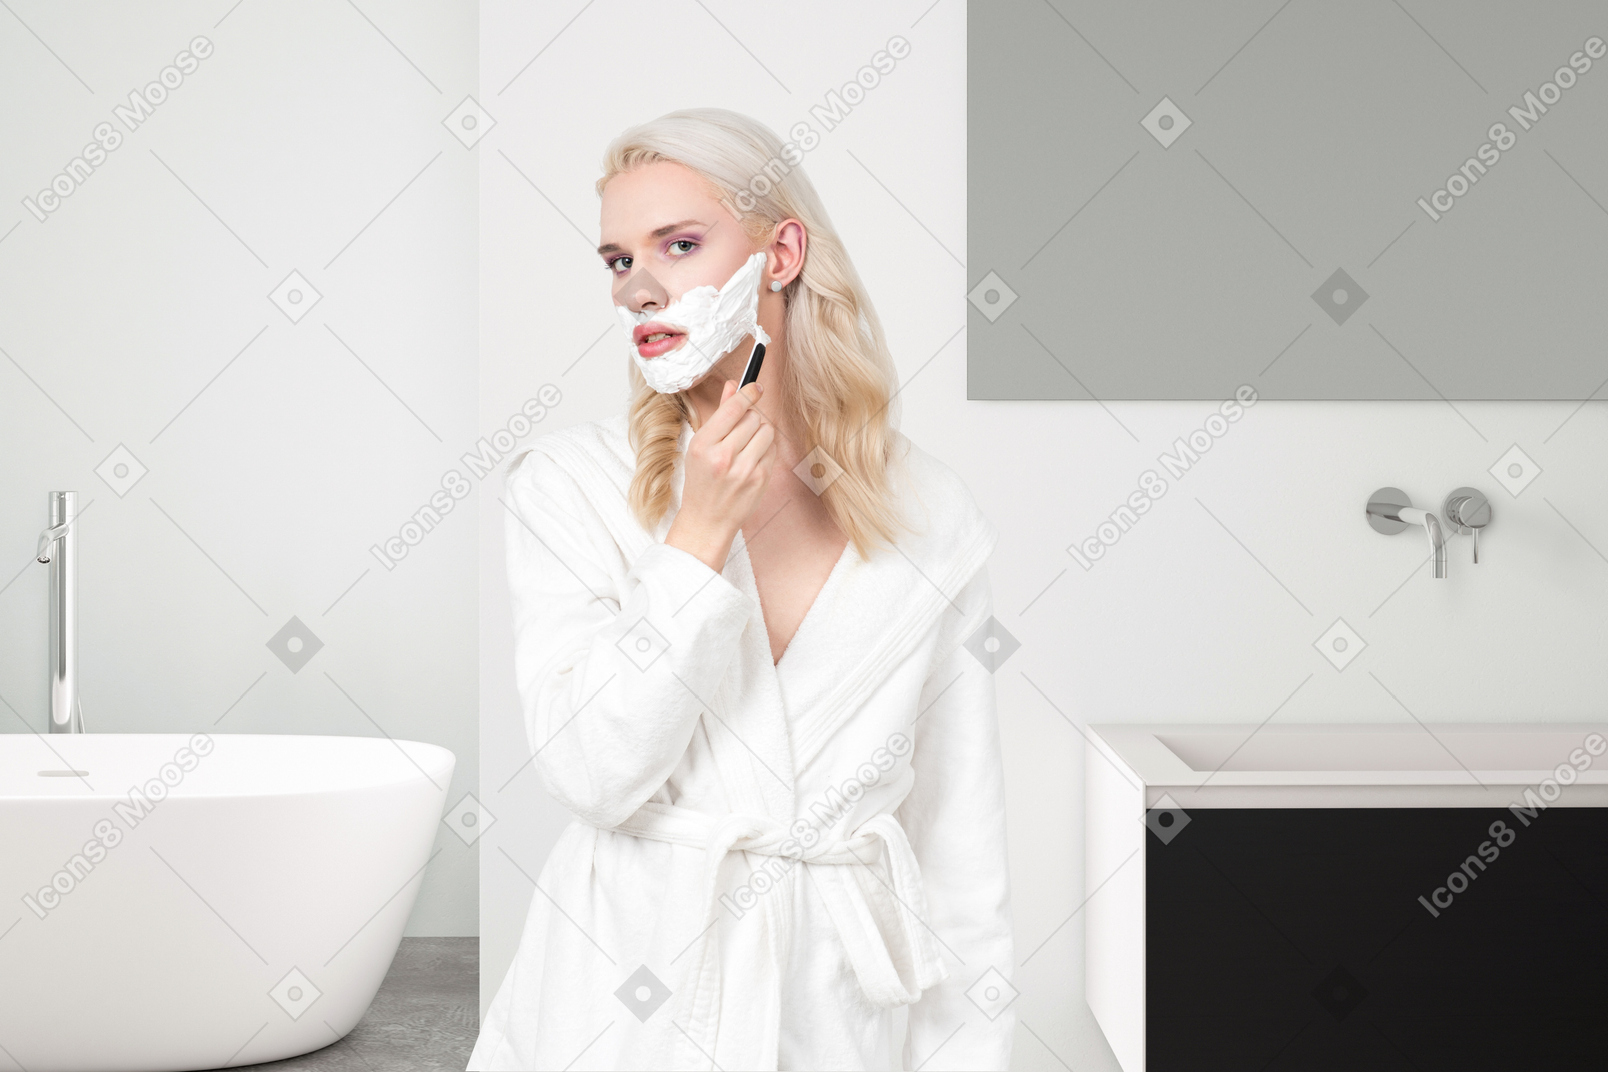 A person shaving their face in a bathroom